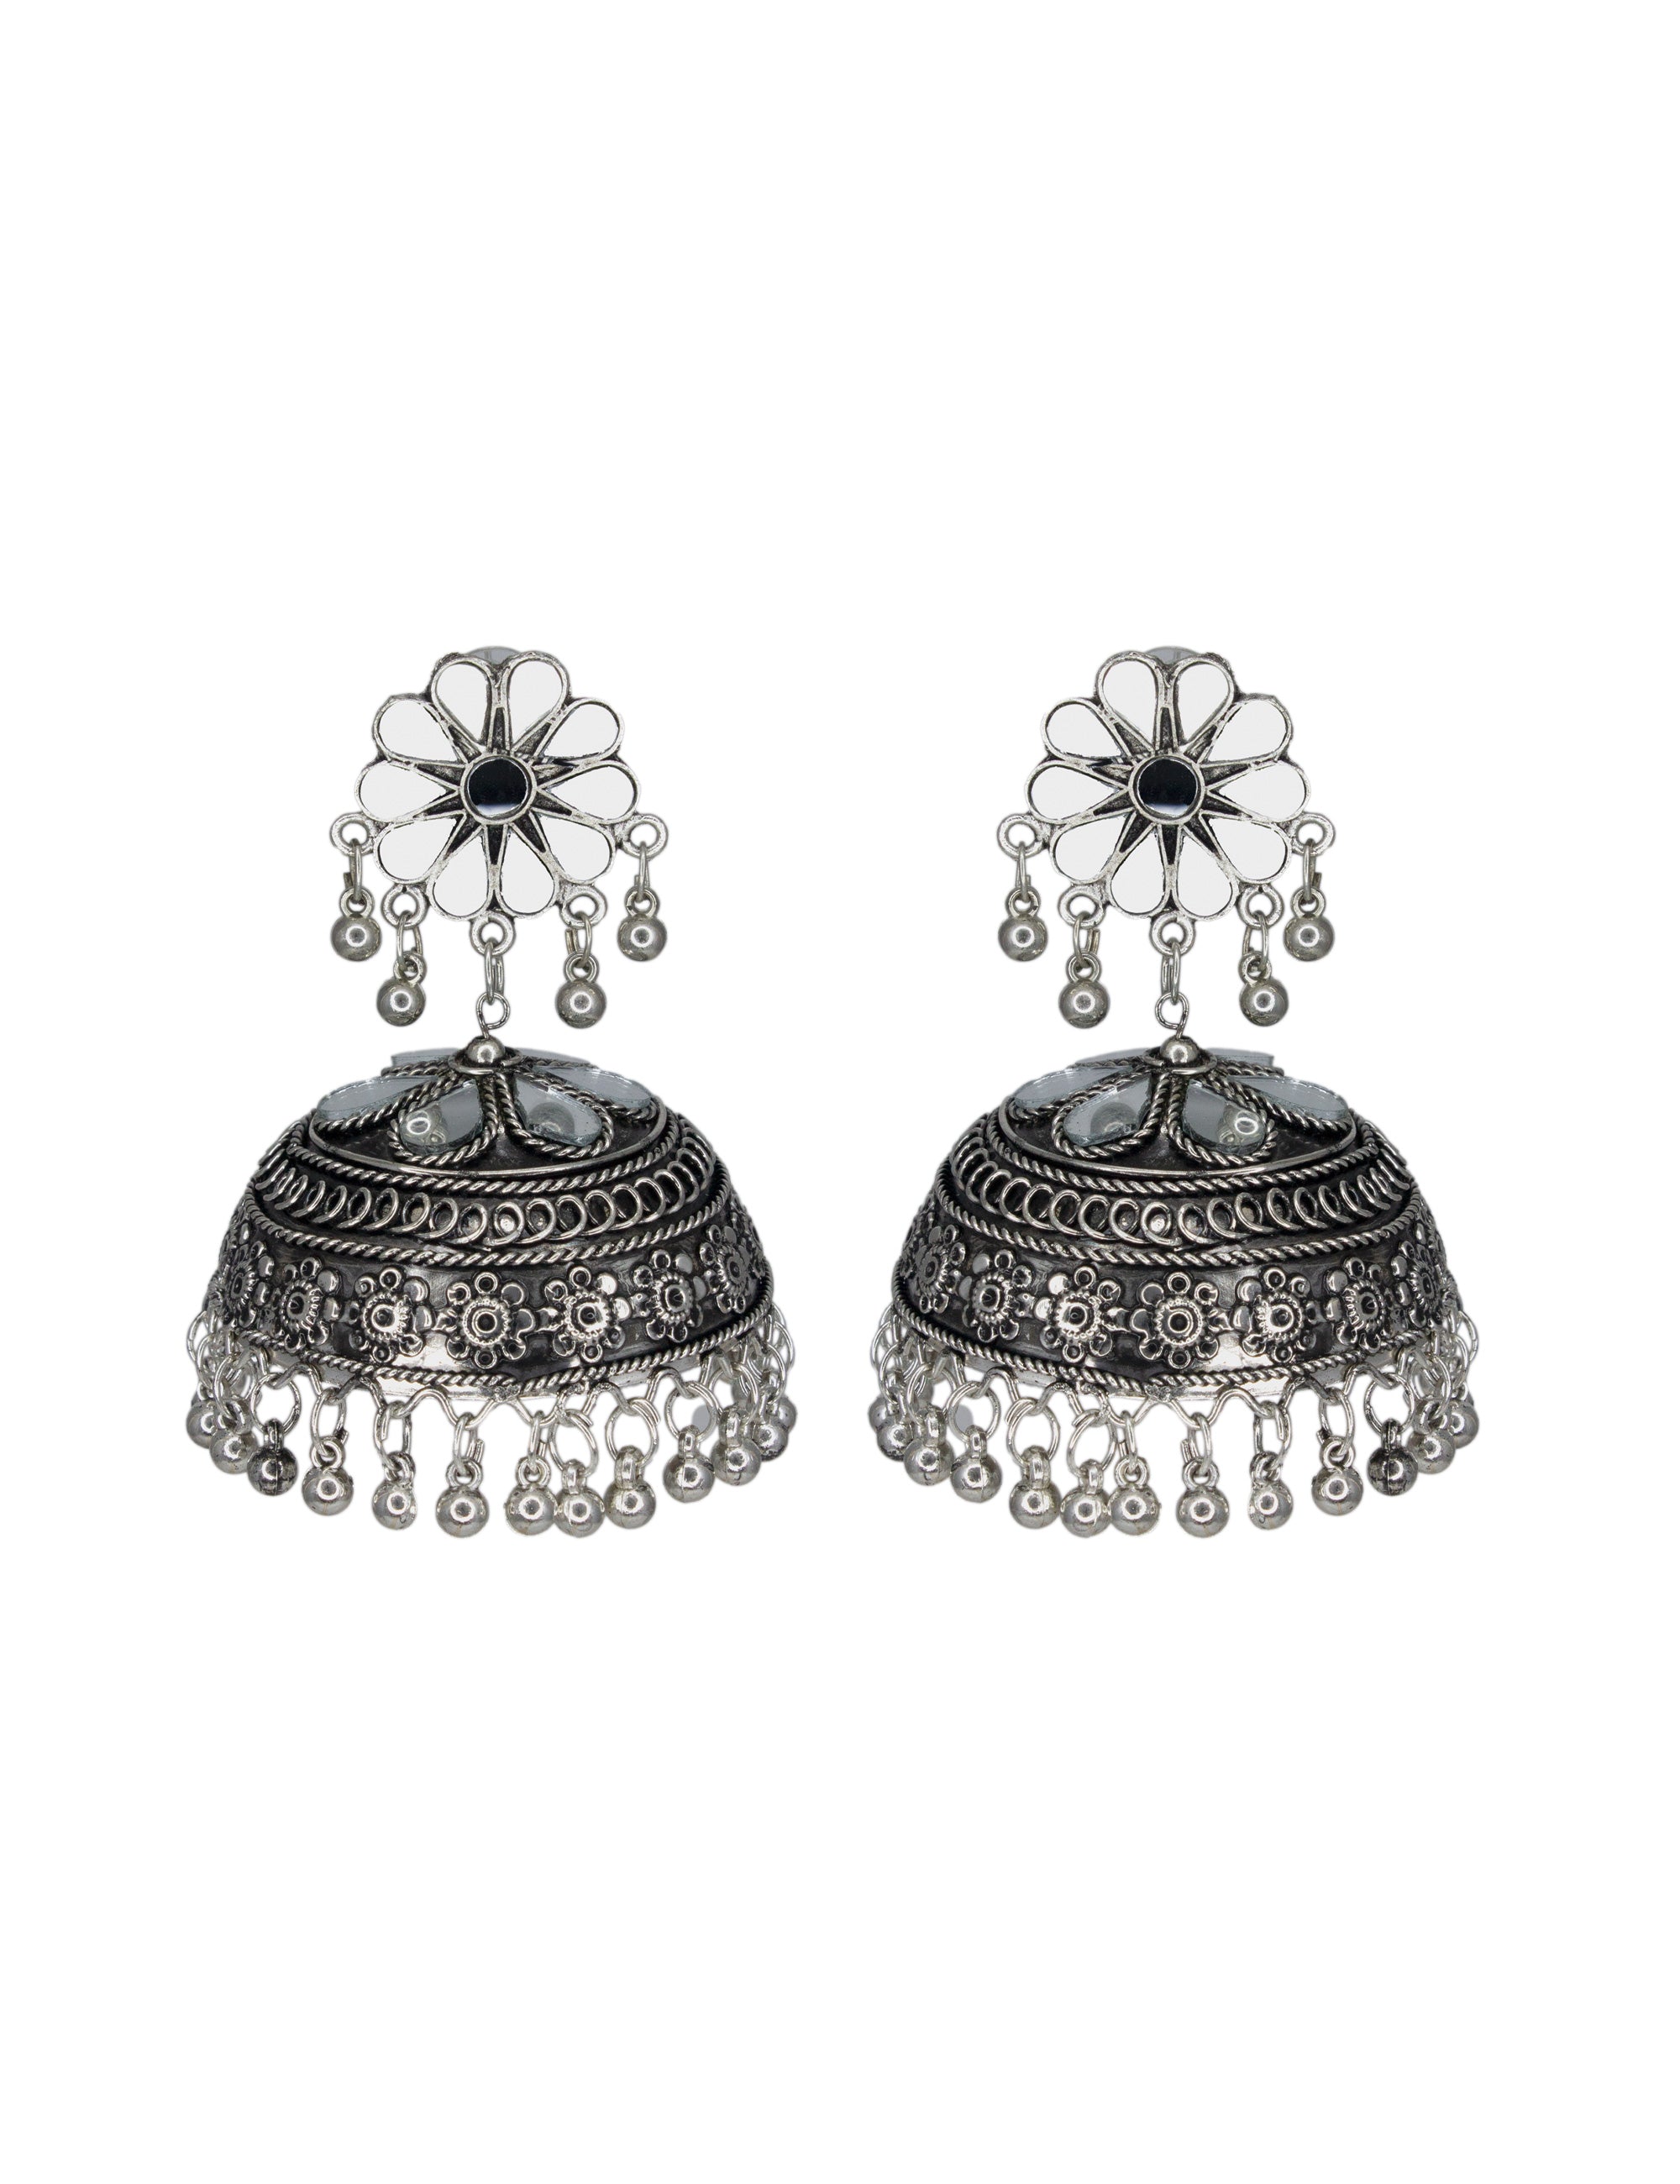 Abhinn Afghani Silver Oxidised Floral Design MIrror Stud Big Jhumka Earring For Women 